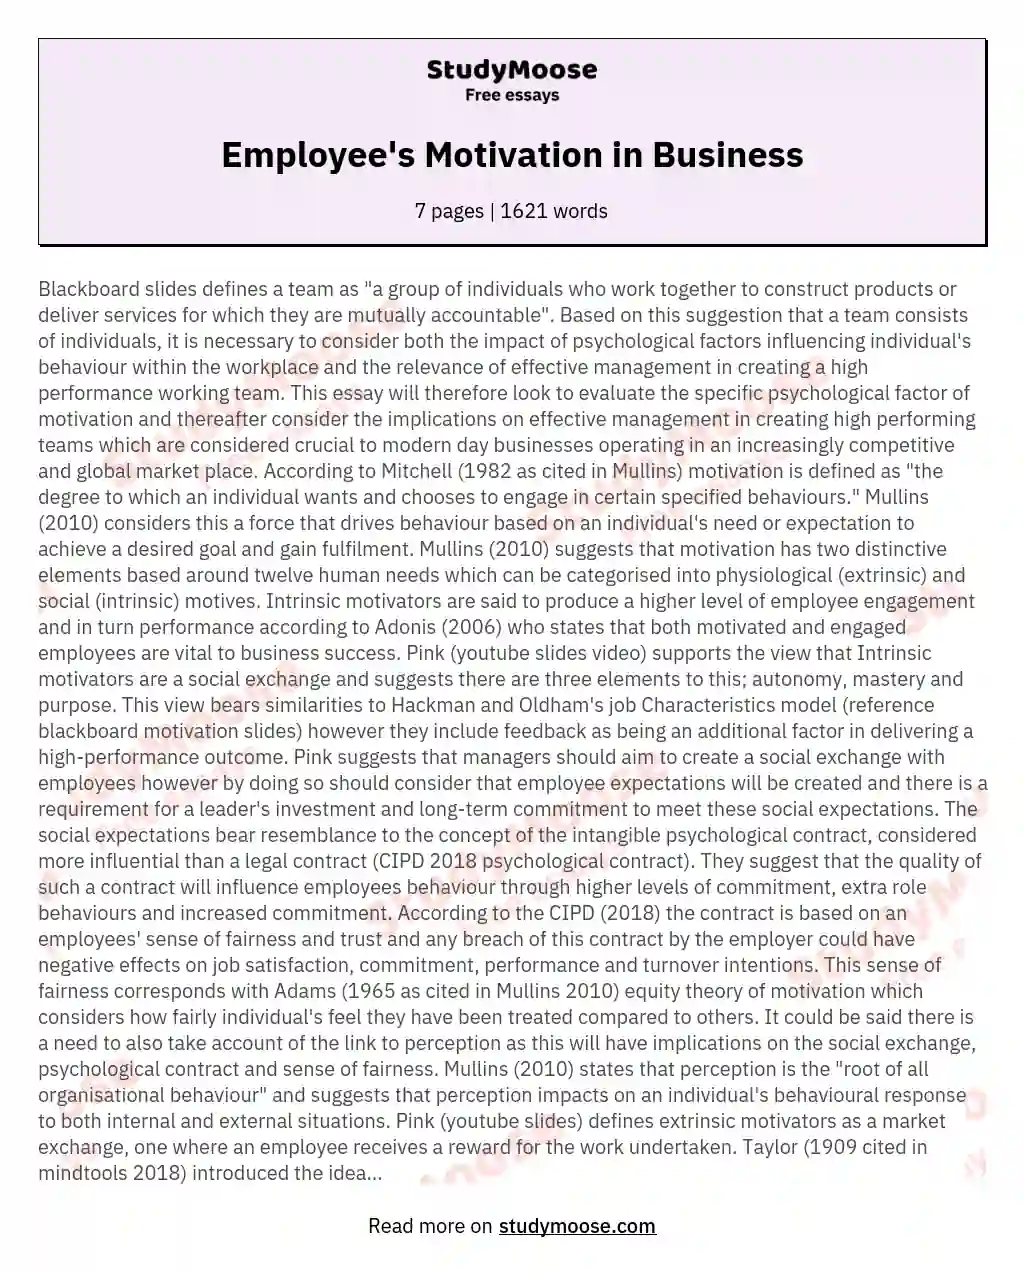 Employee's Motivation in Business essay